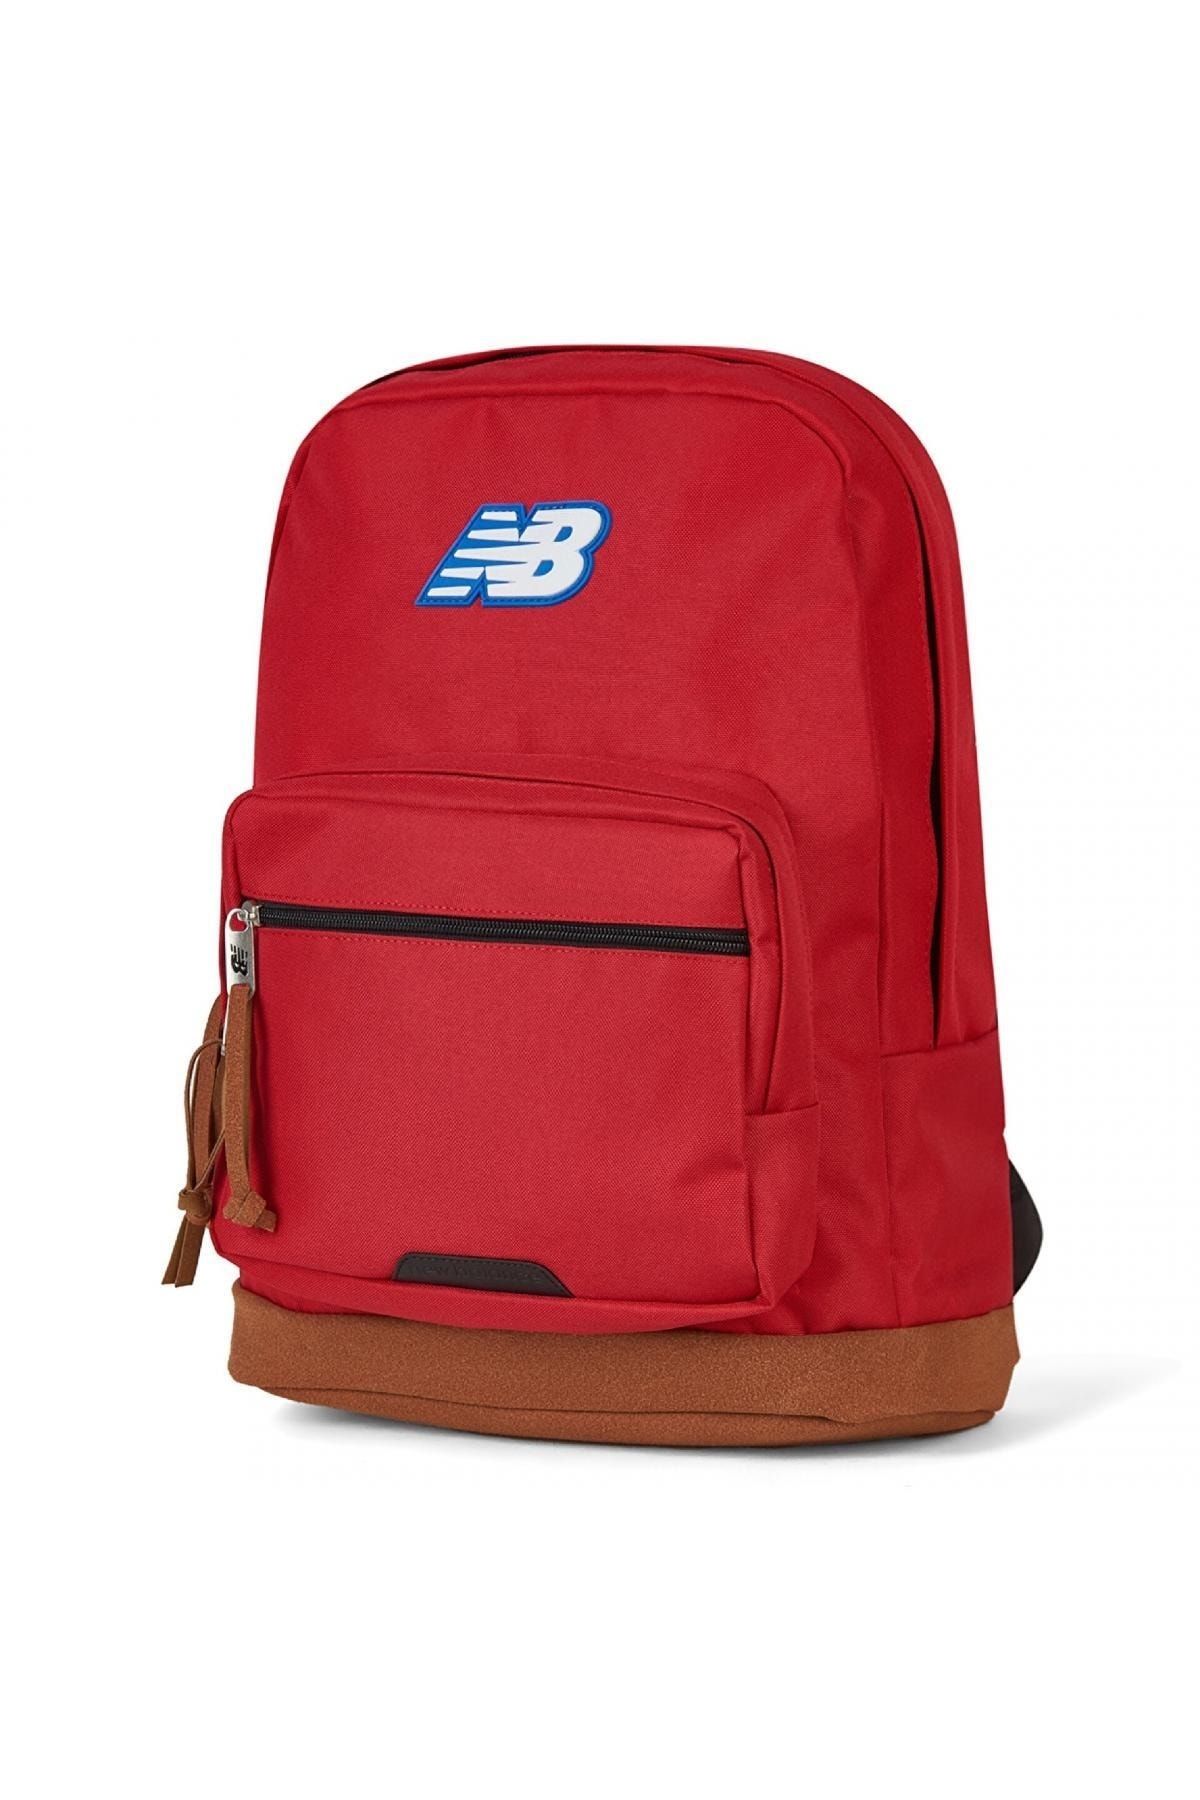 New Balance Anb3202 Nb Backpack Kırmızı Erkek Çanta